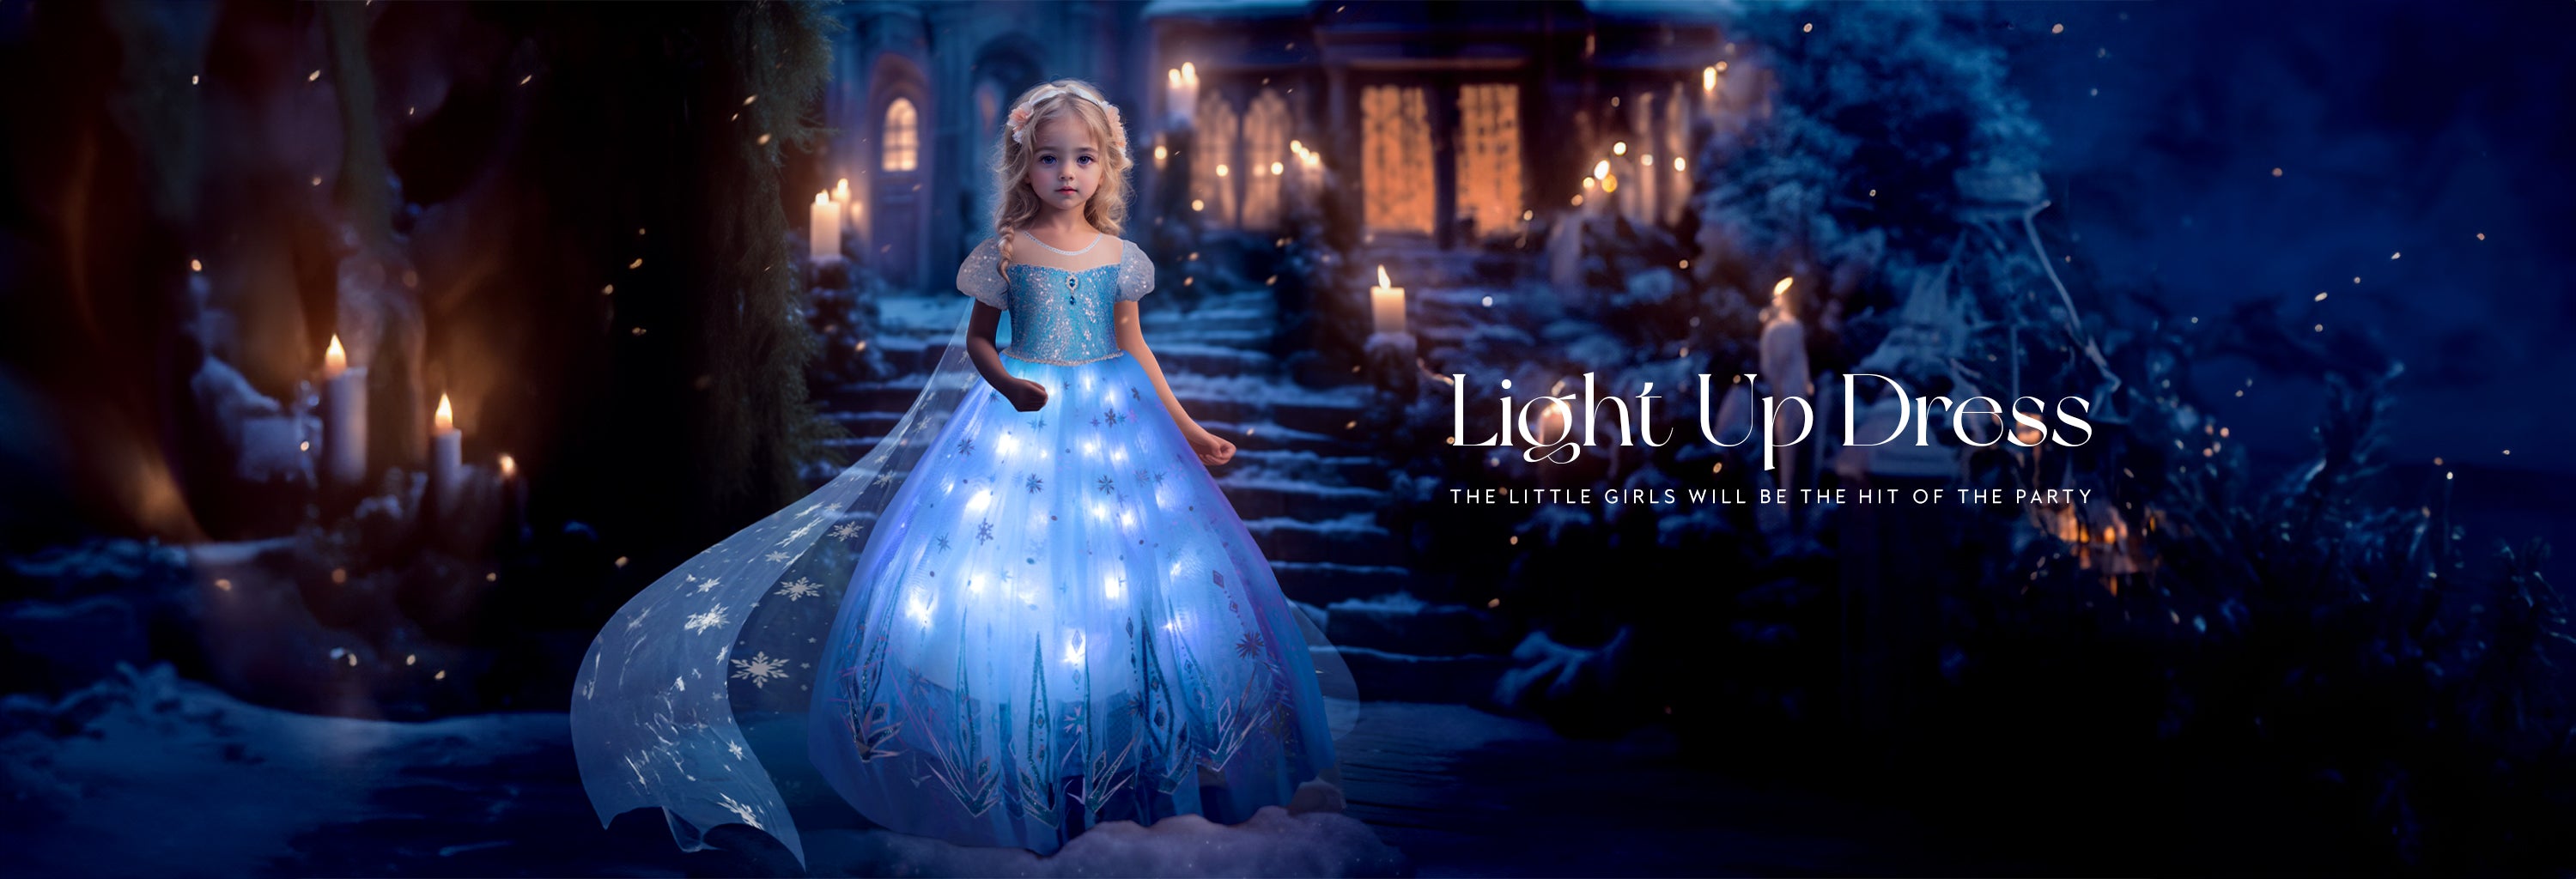 The best Light Up Princess Dresses - My Fancy Dress Box